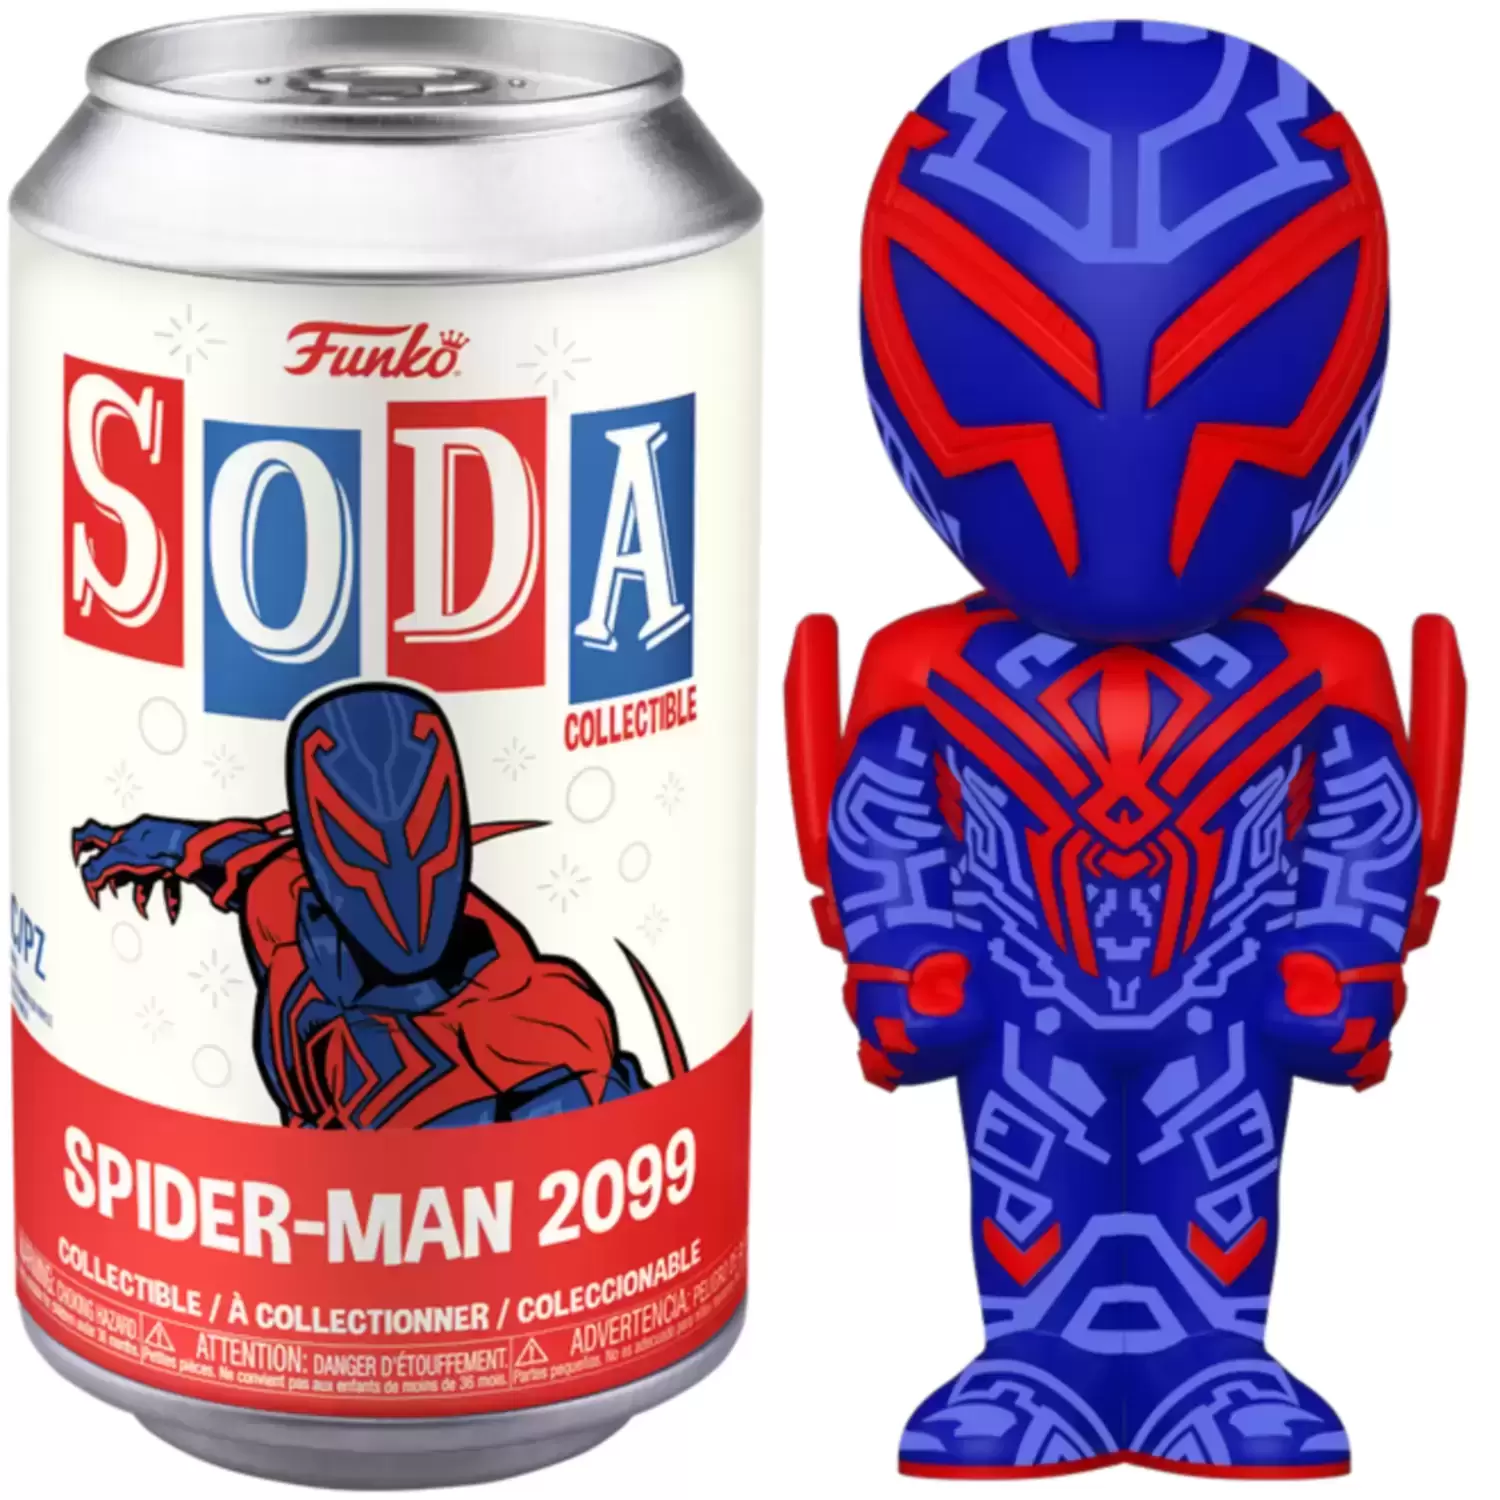 Vinyl Soda! - Spider-Man 2099